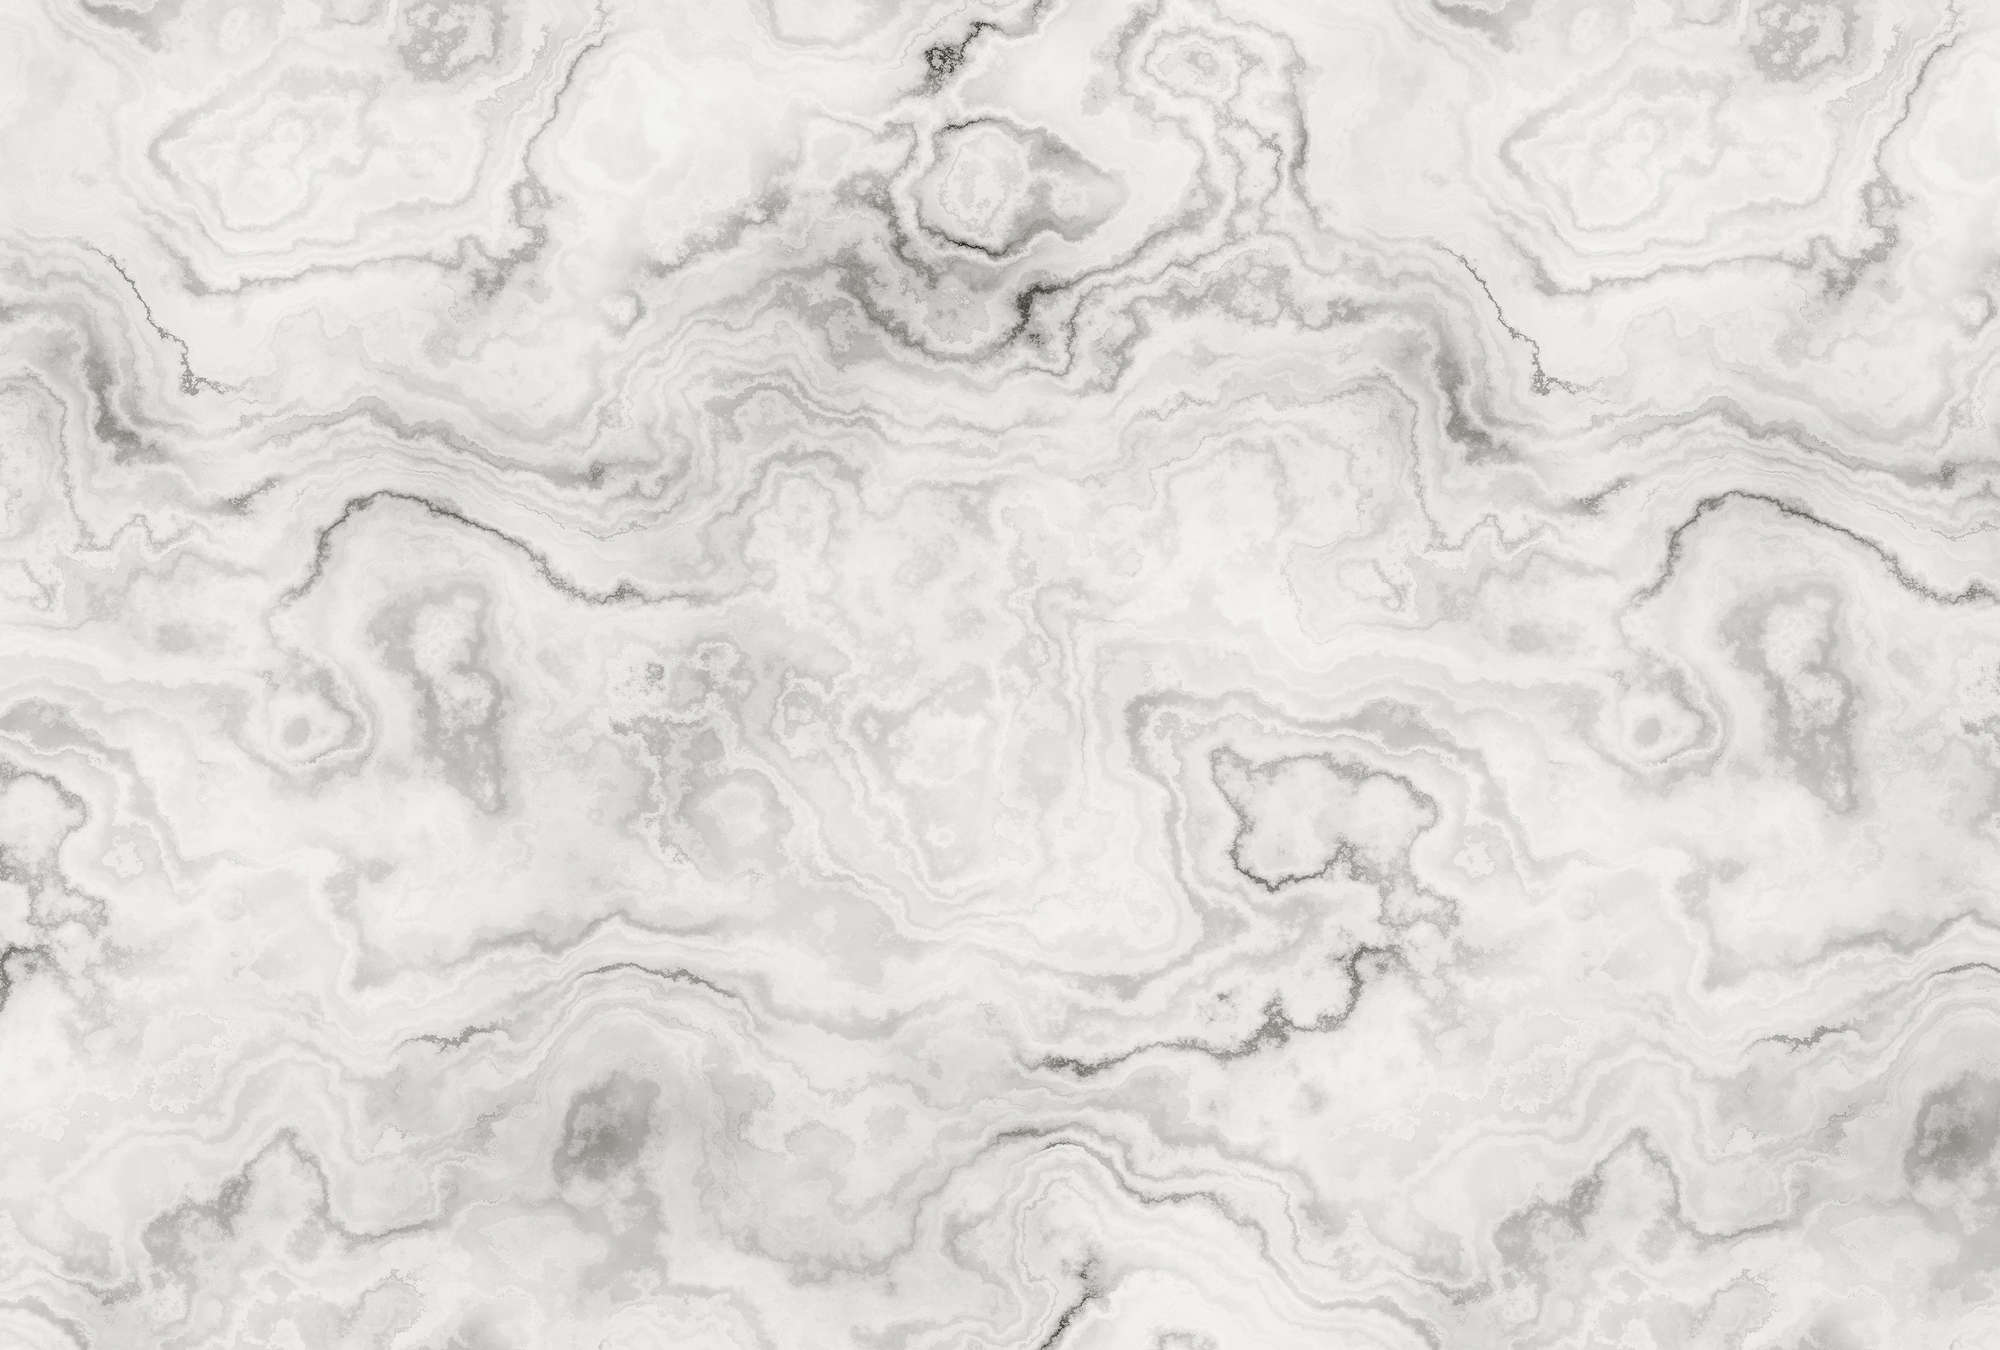             Carrara 1 - Elegant marble-look wallpaper - Grey, White | Matt smooth fleece
        